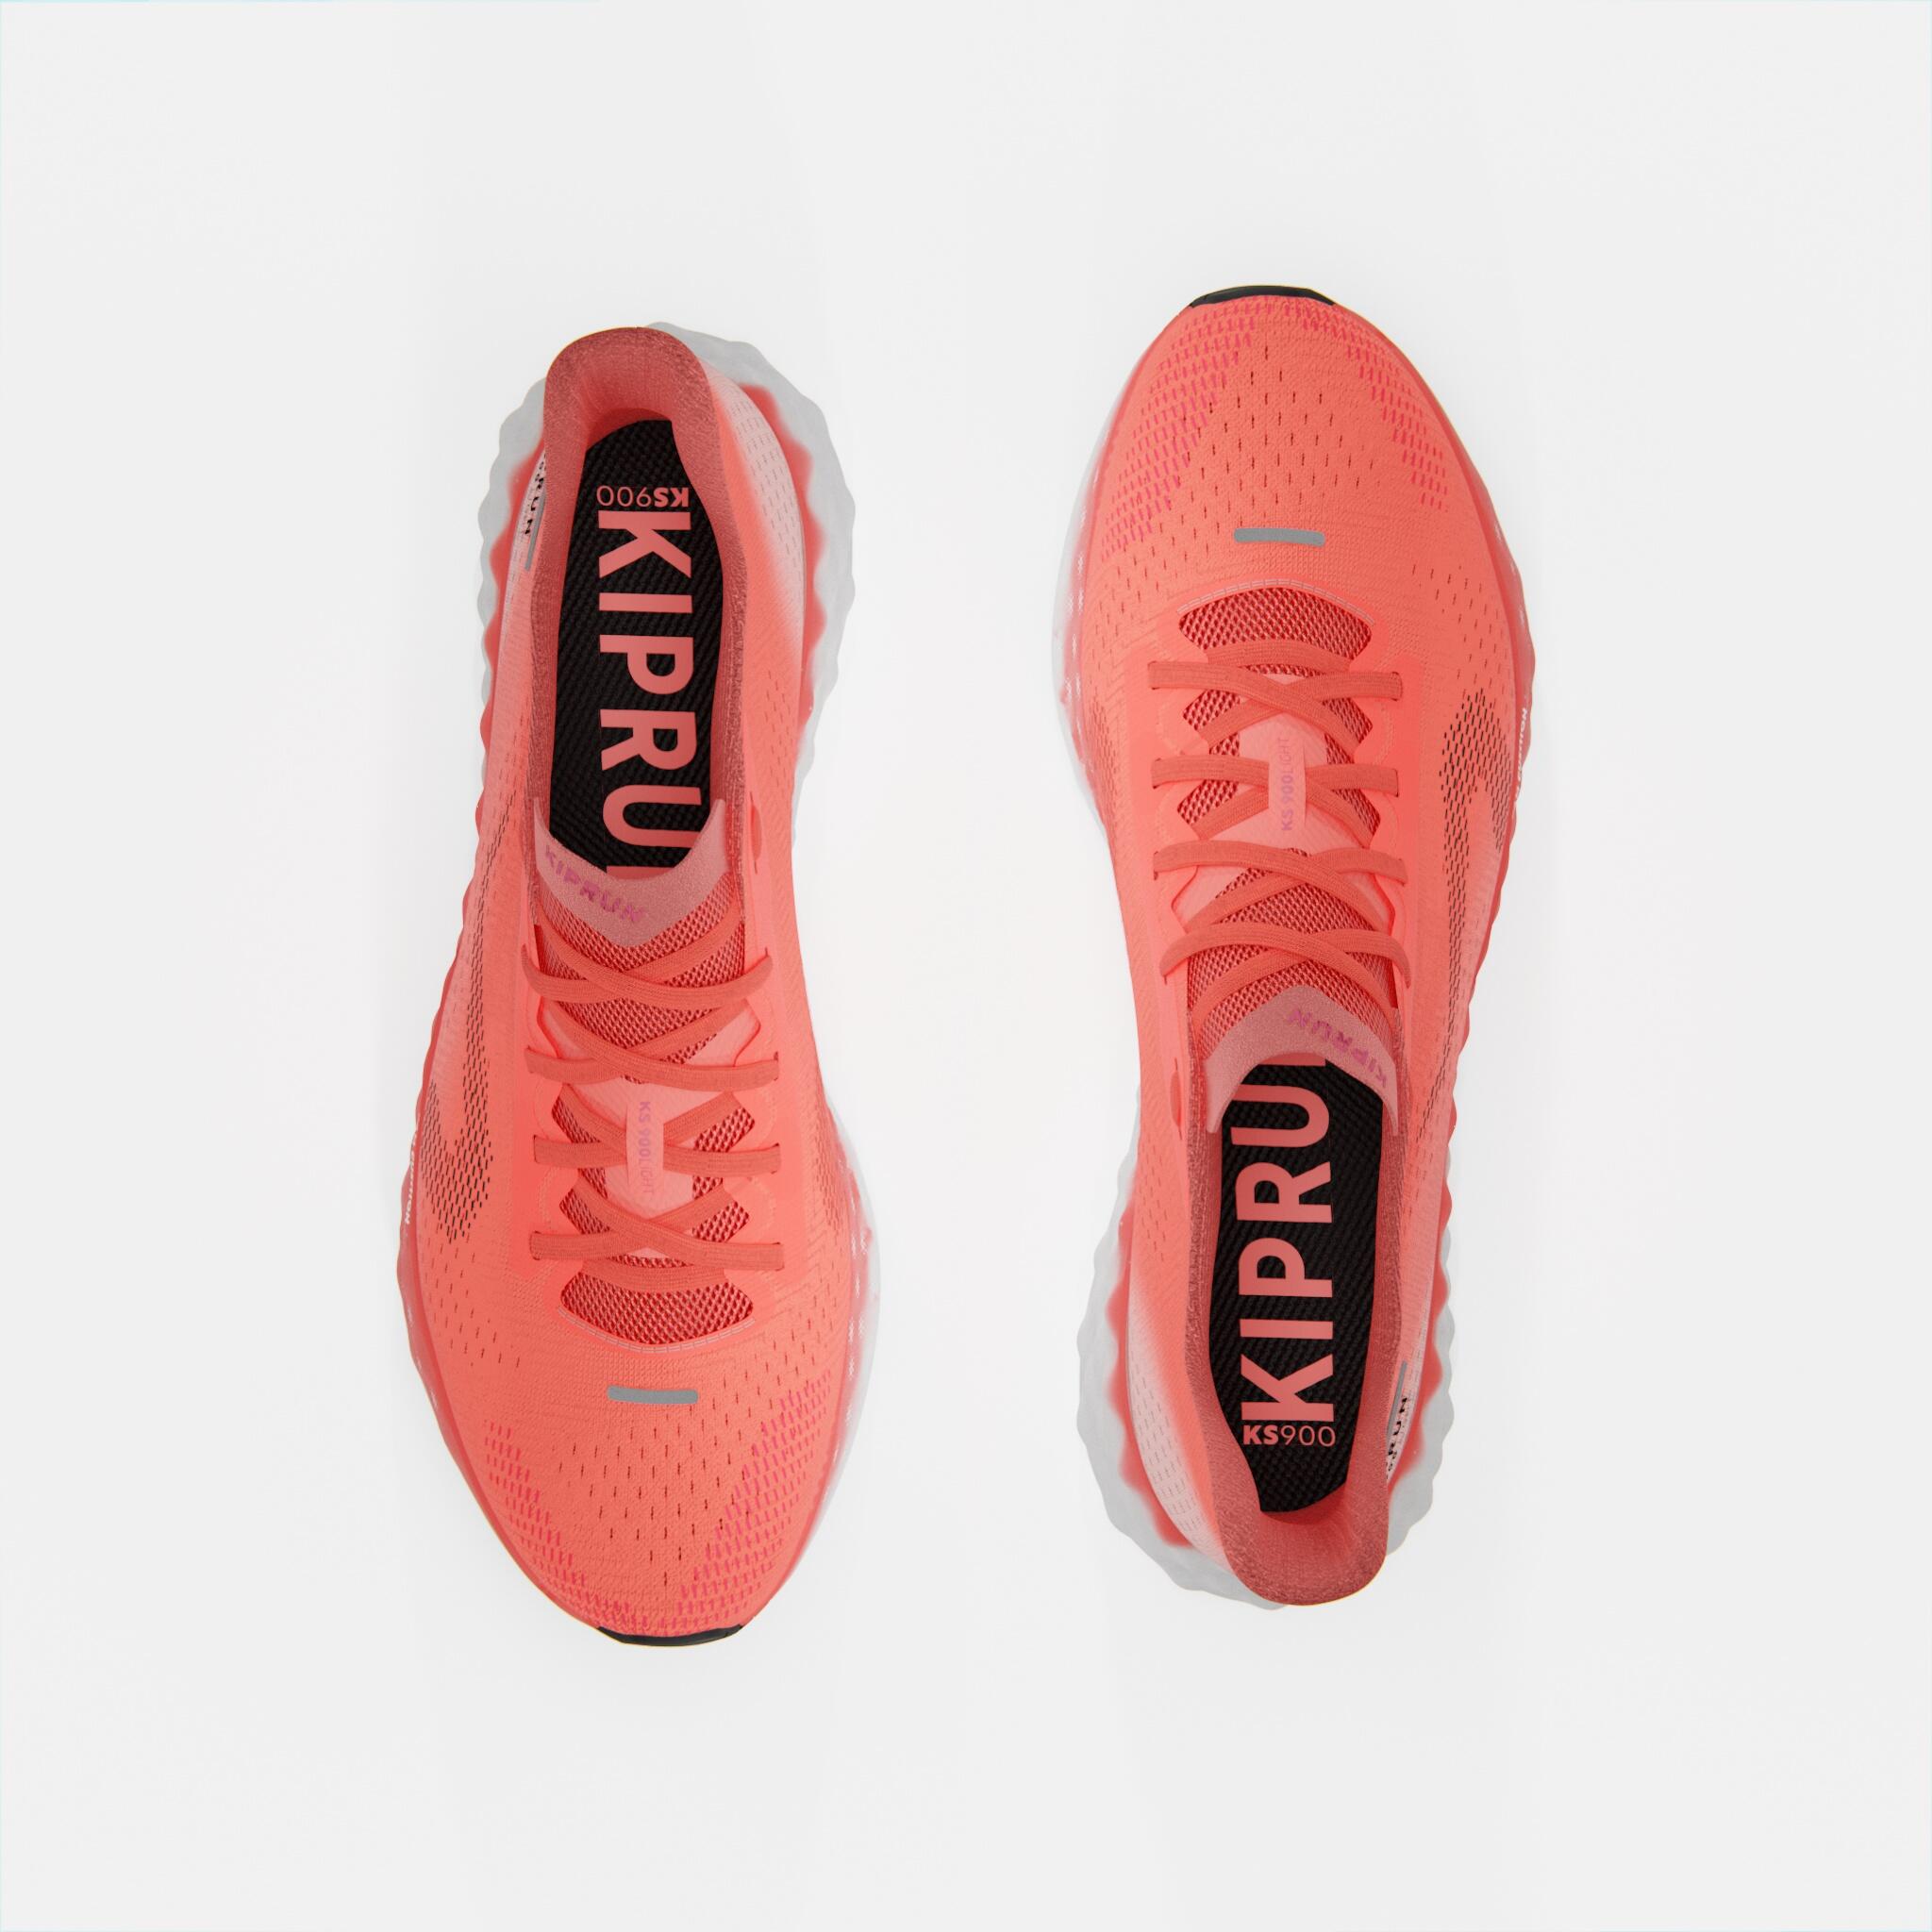 Women's Running Shoes - KS 900 Light Coral - Fluo peach, Snow